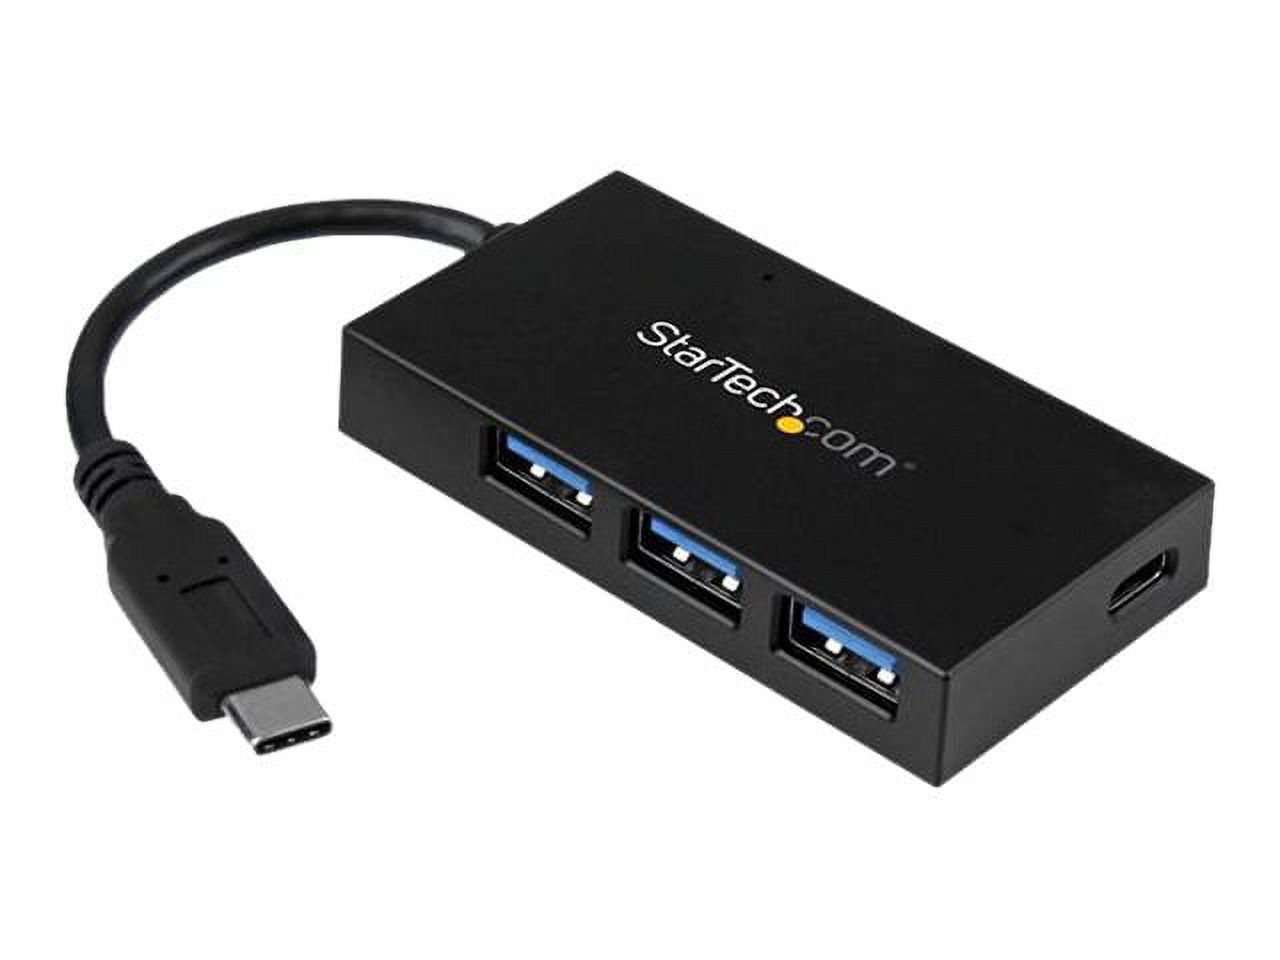 StarTech.com USB C Hub �����" 4 Port USB-C to USB-A (3x) and USB-C (1x) �����" with Power Adapter �����" USB Type C Hub �����" Port Expander - image 1 of 7